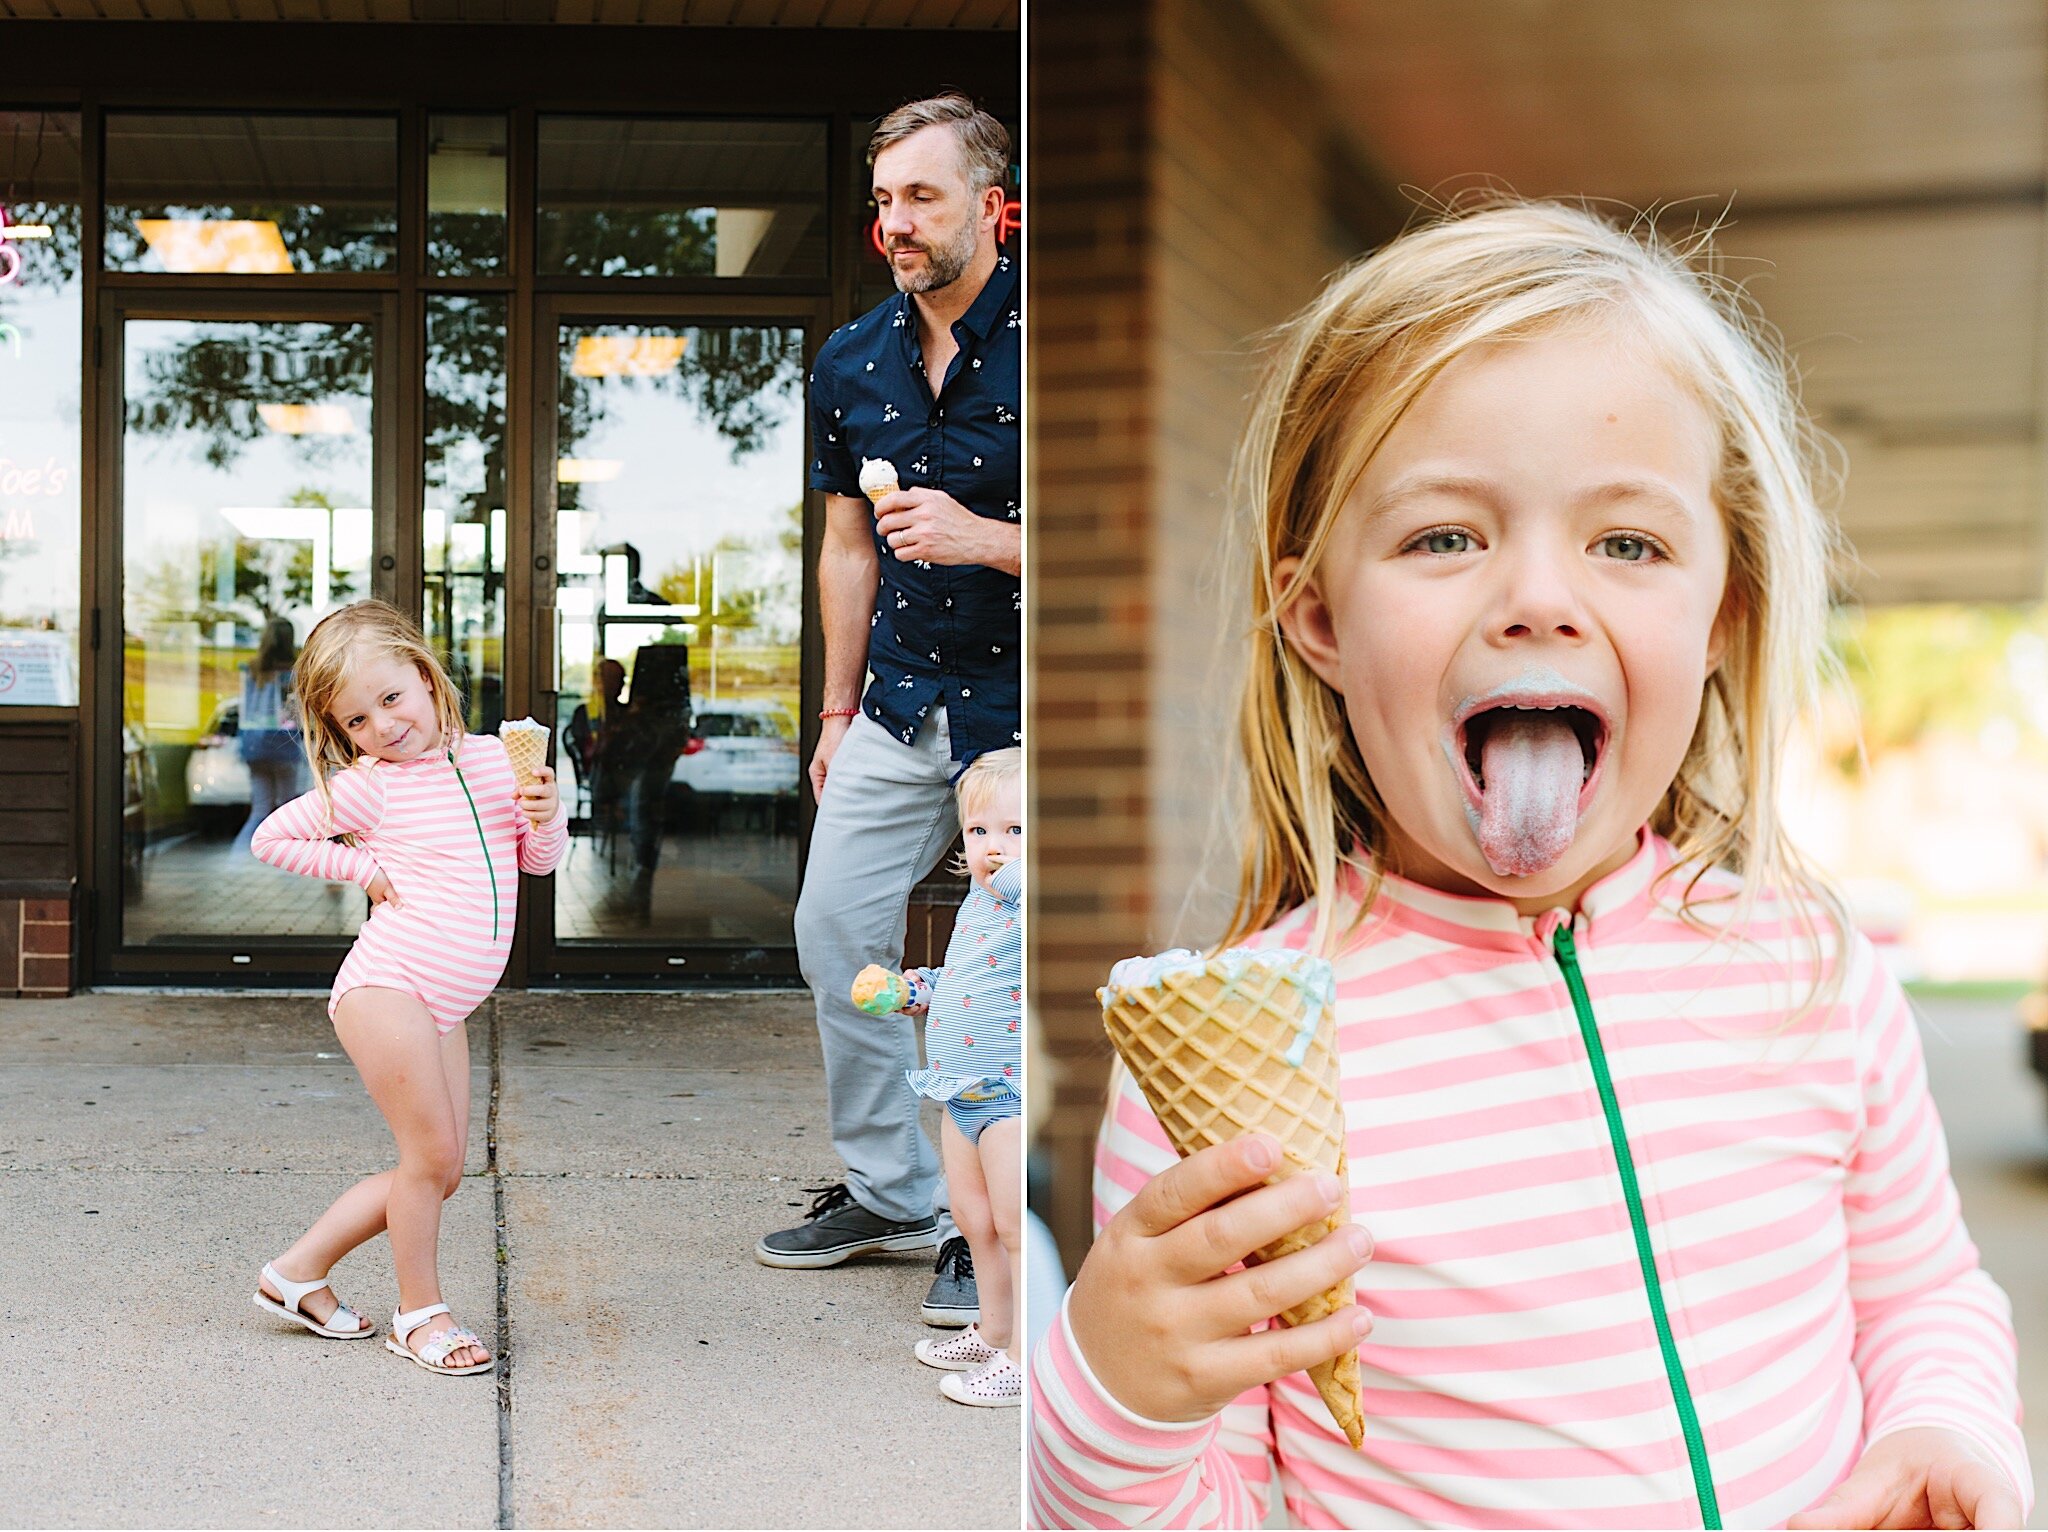 Fun family portraits at an ice cream shoppe in Minneapolis